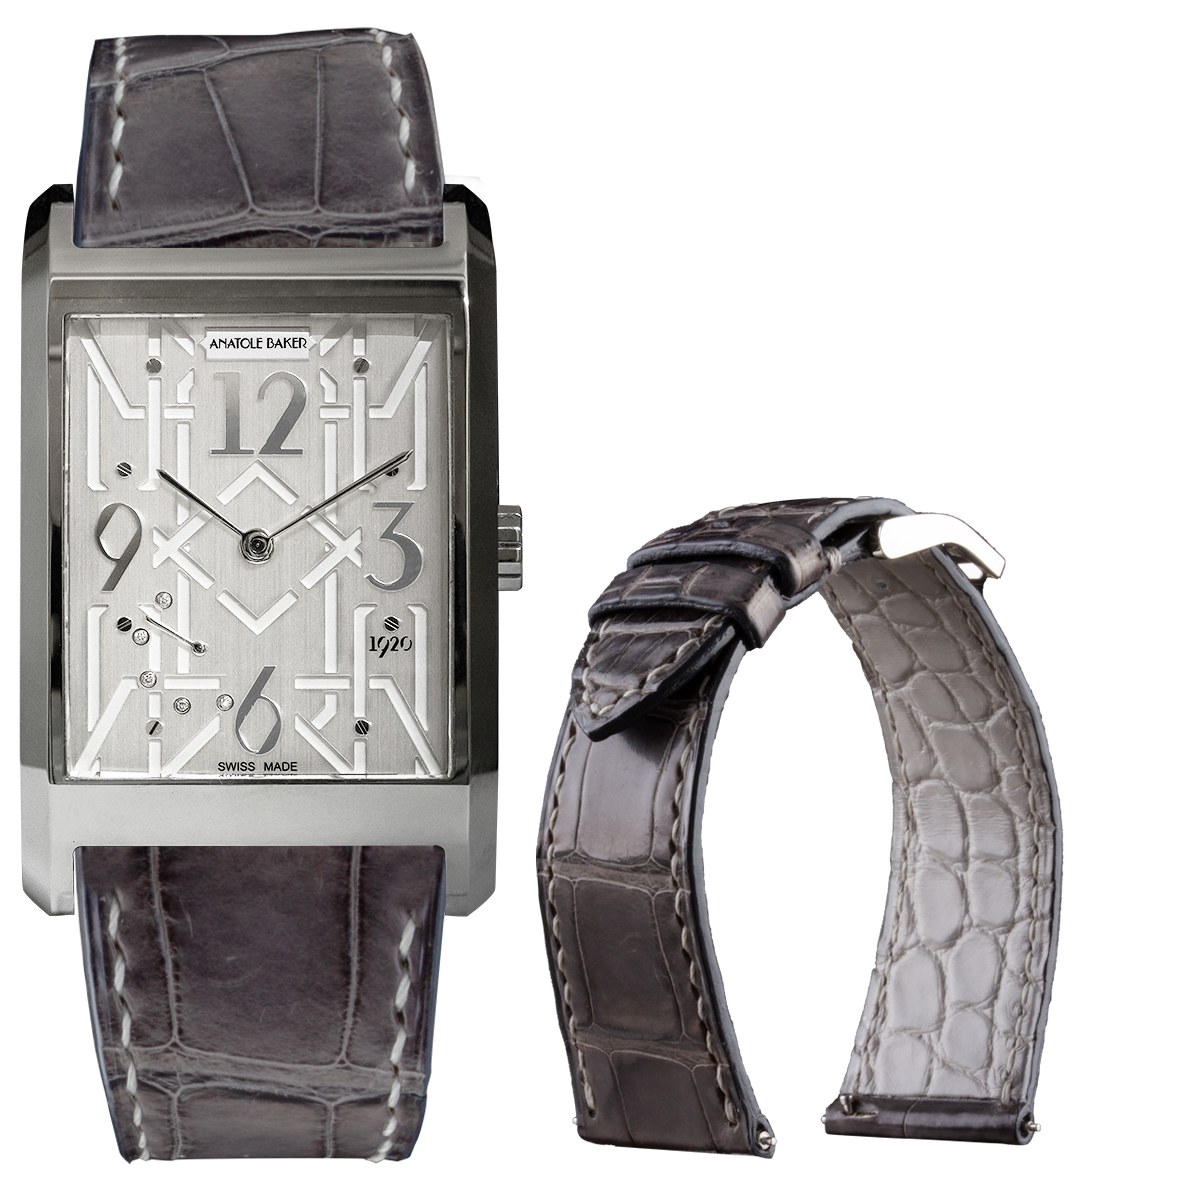 ANATOLE BAKER 1920 watch - Dandy white diamonds - Grey alligator strap